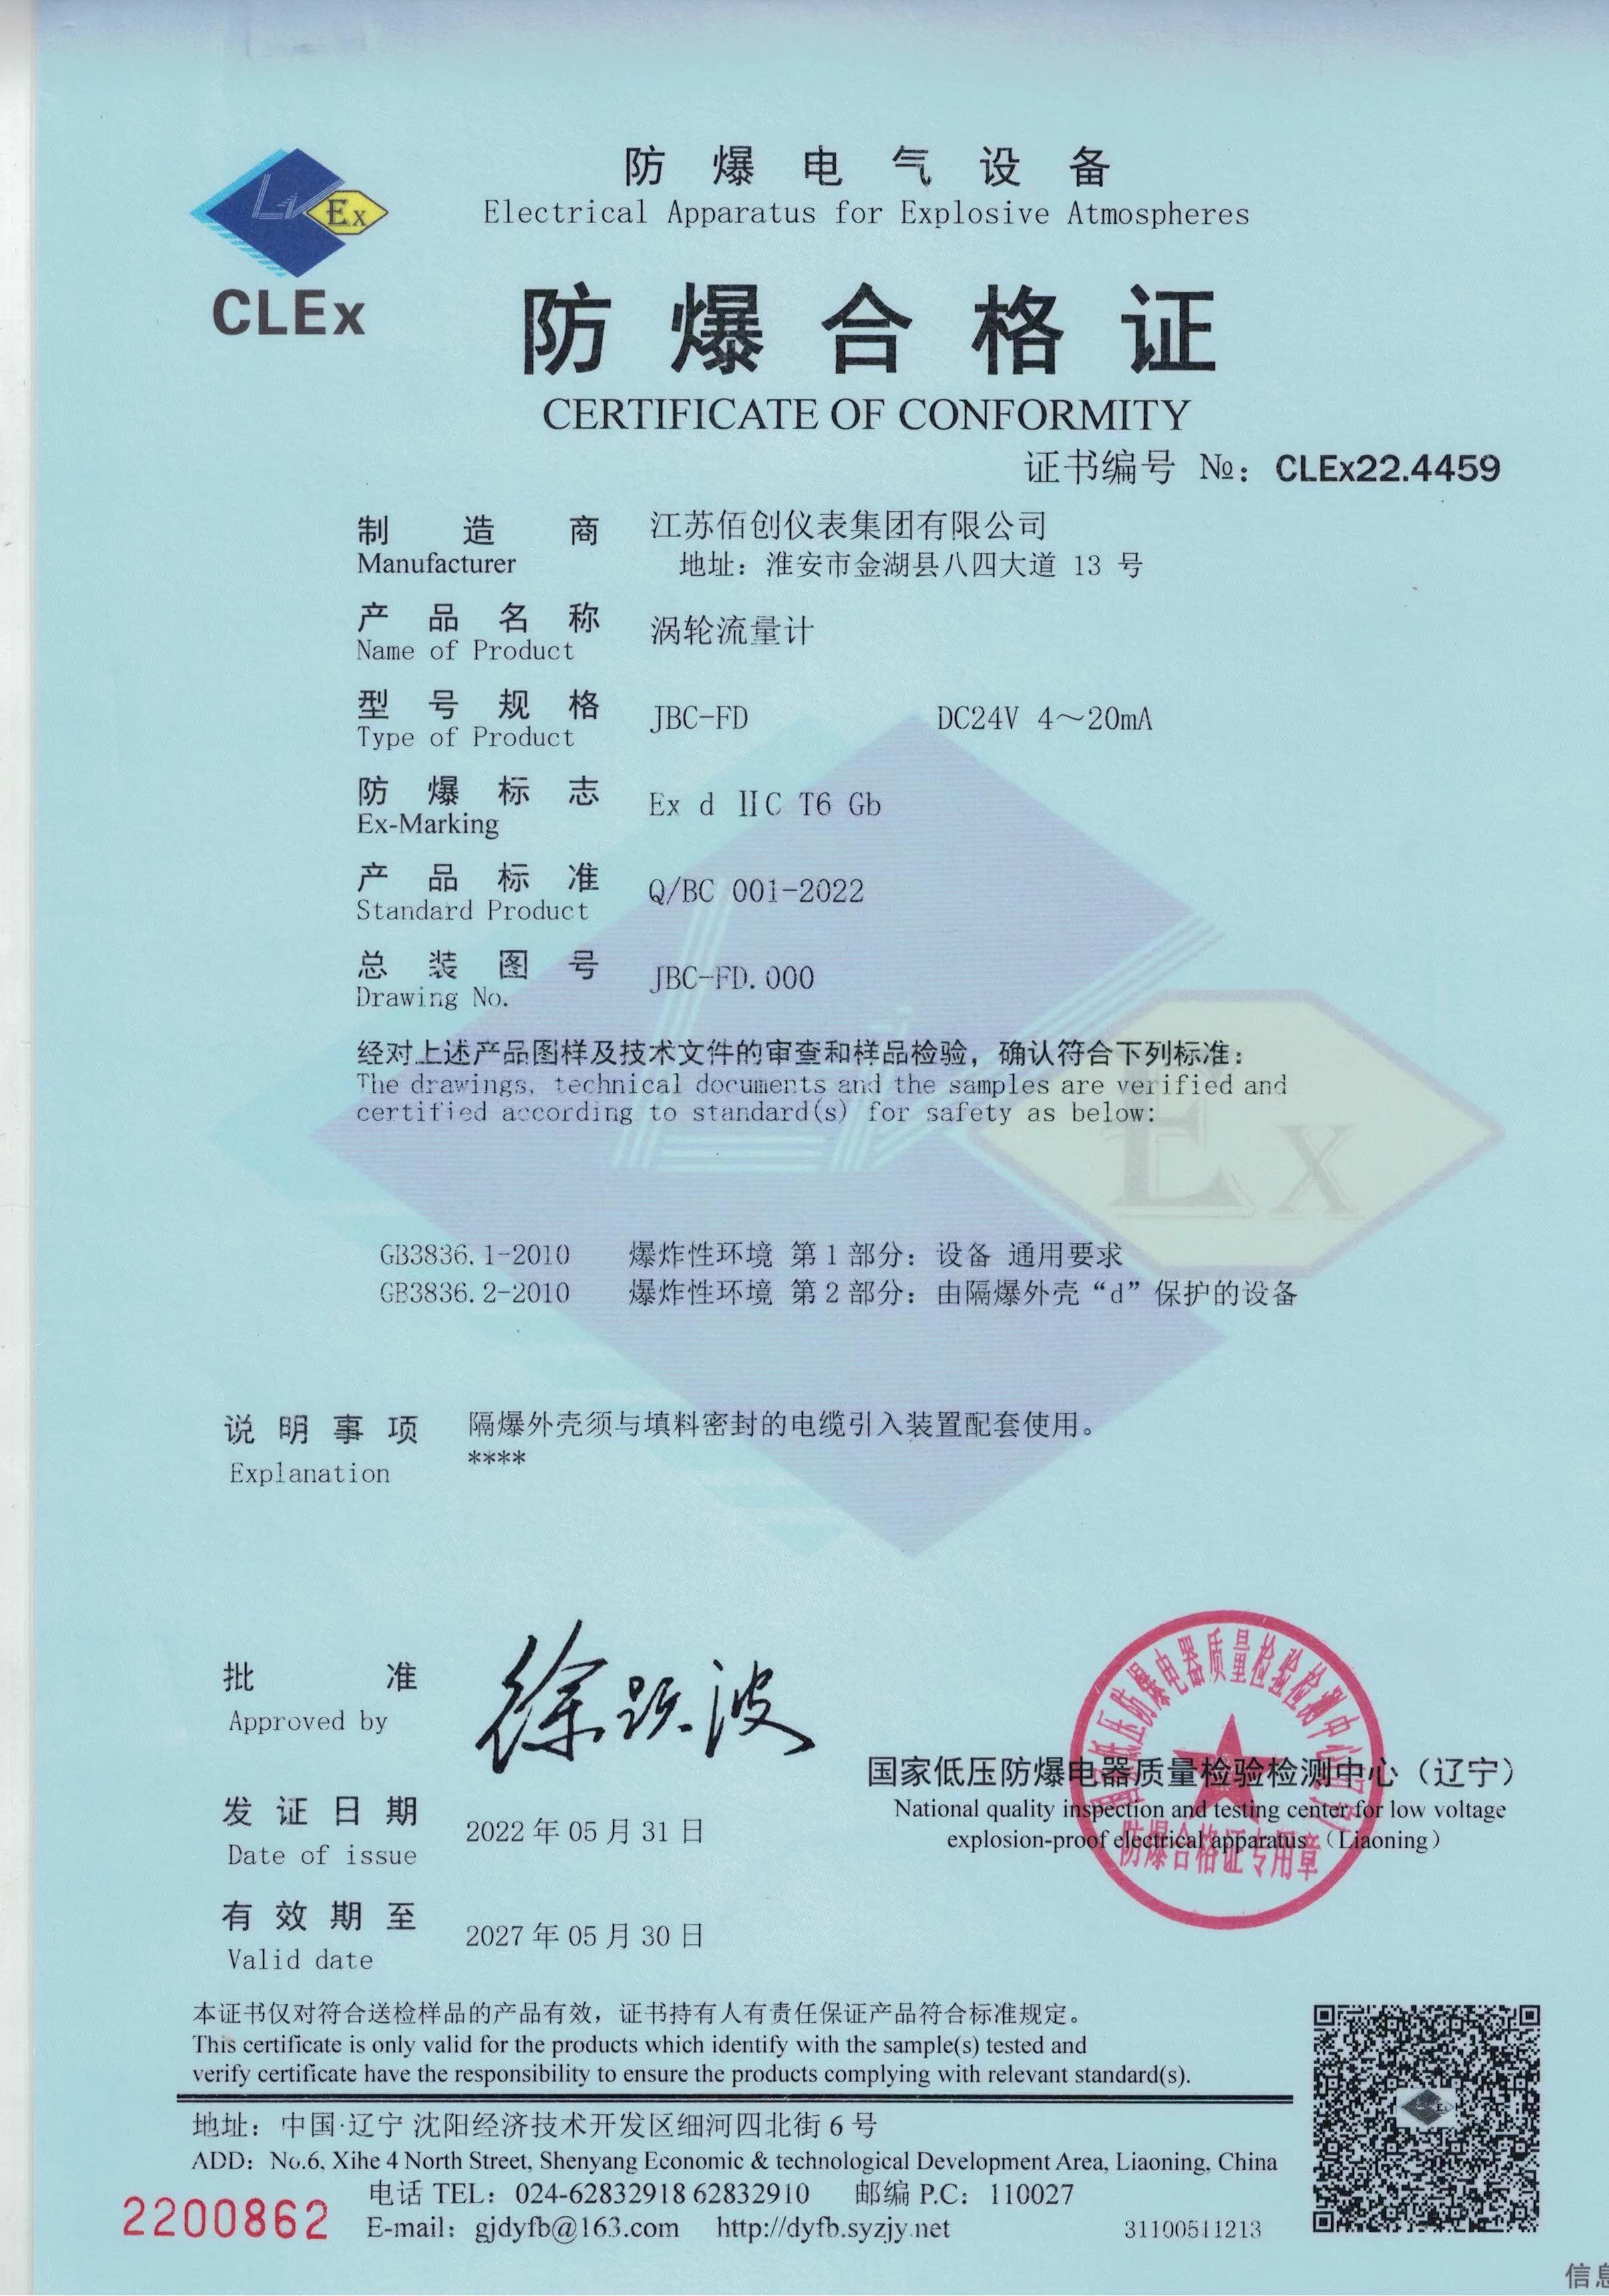 Turbine Flowmenter certificate